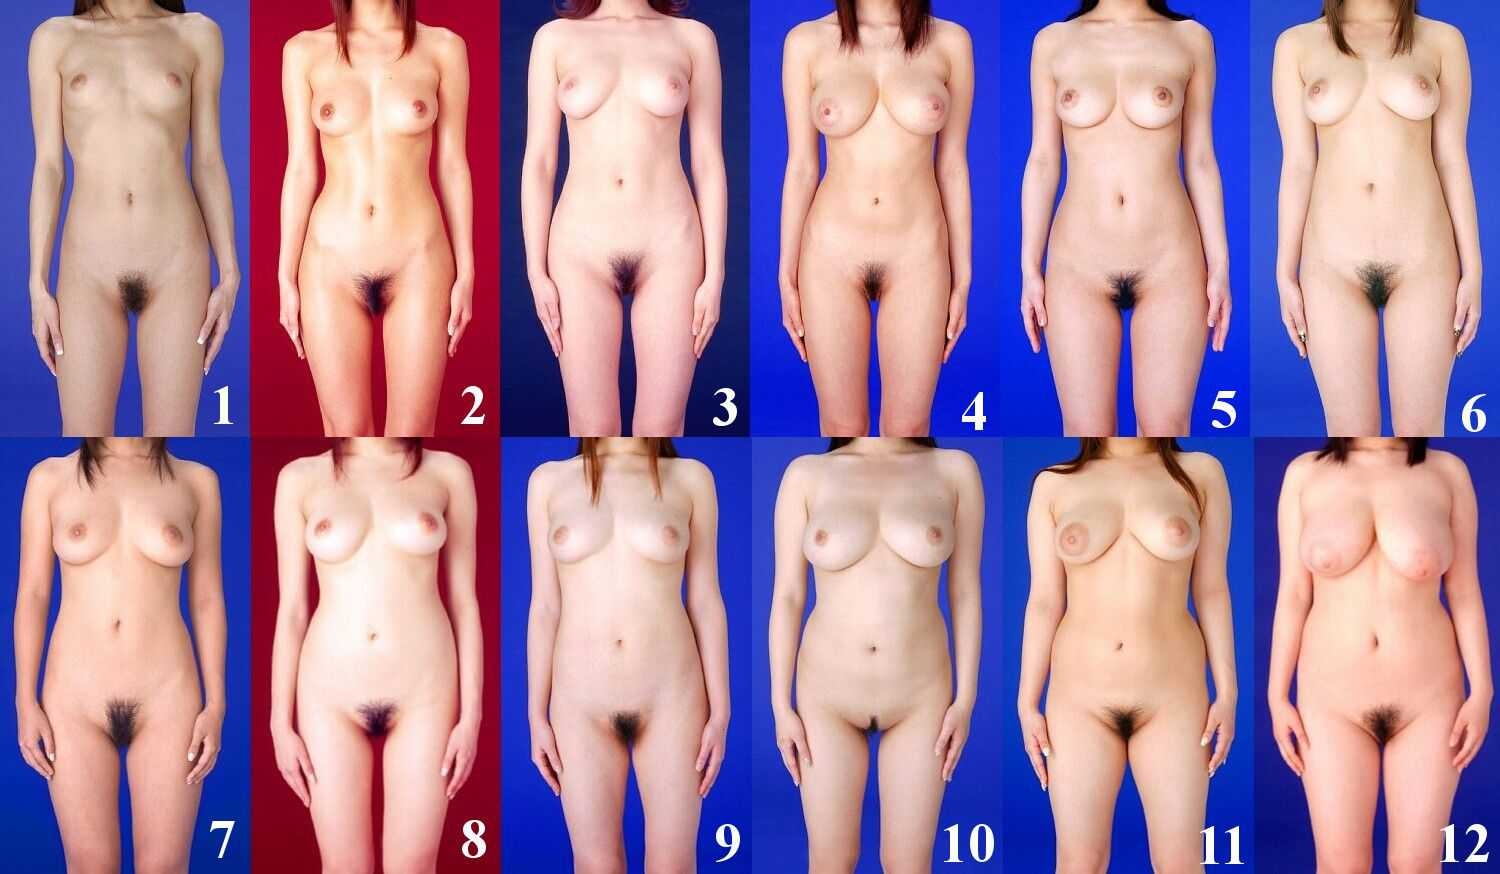 виды форм груди женщин фото 78